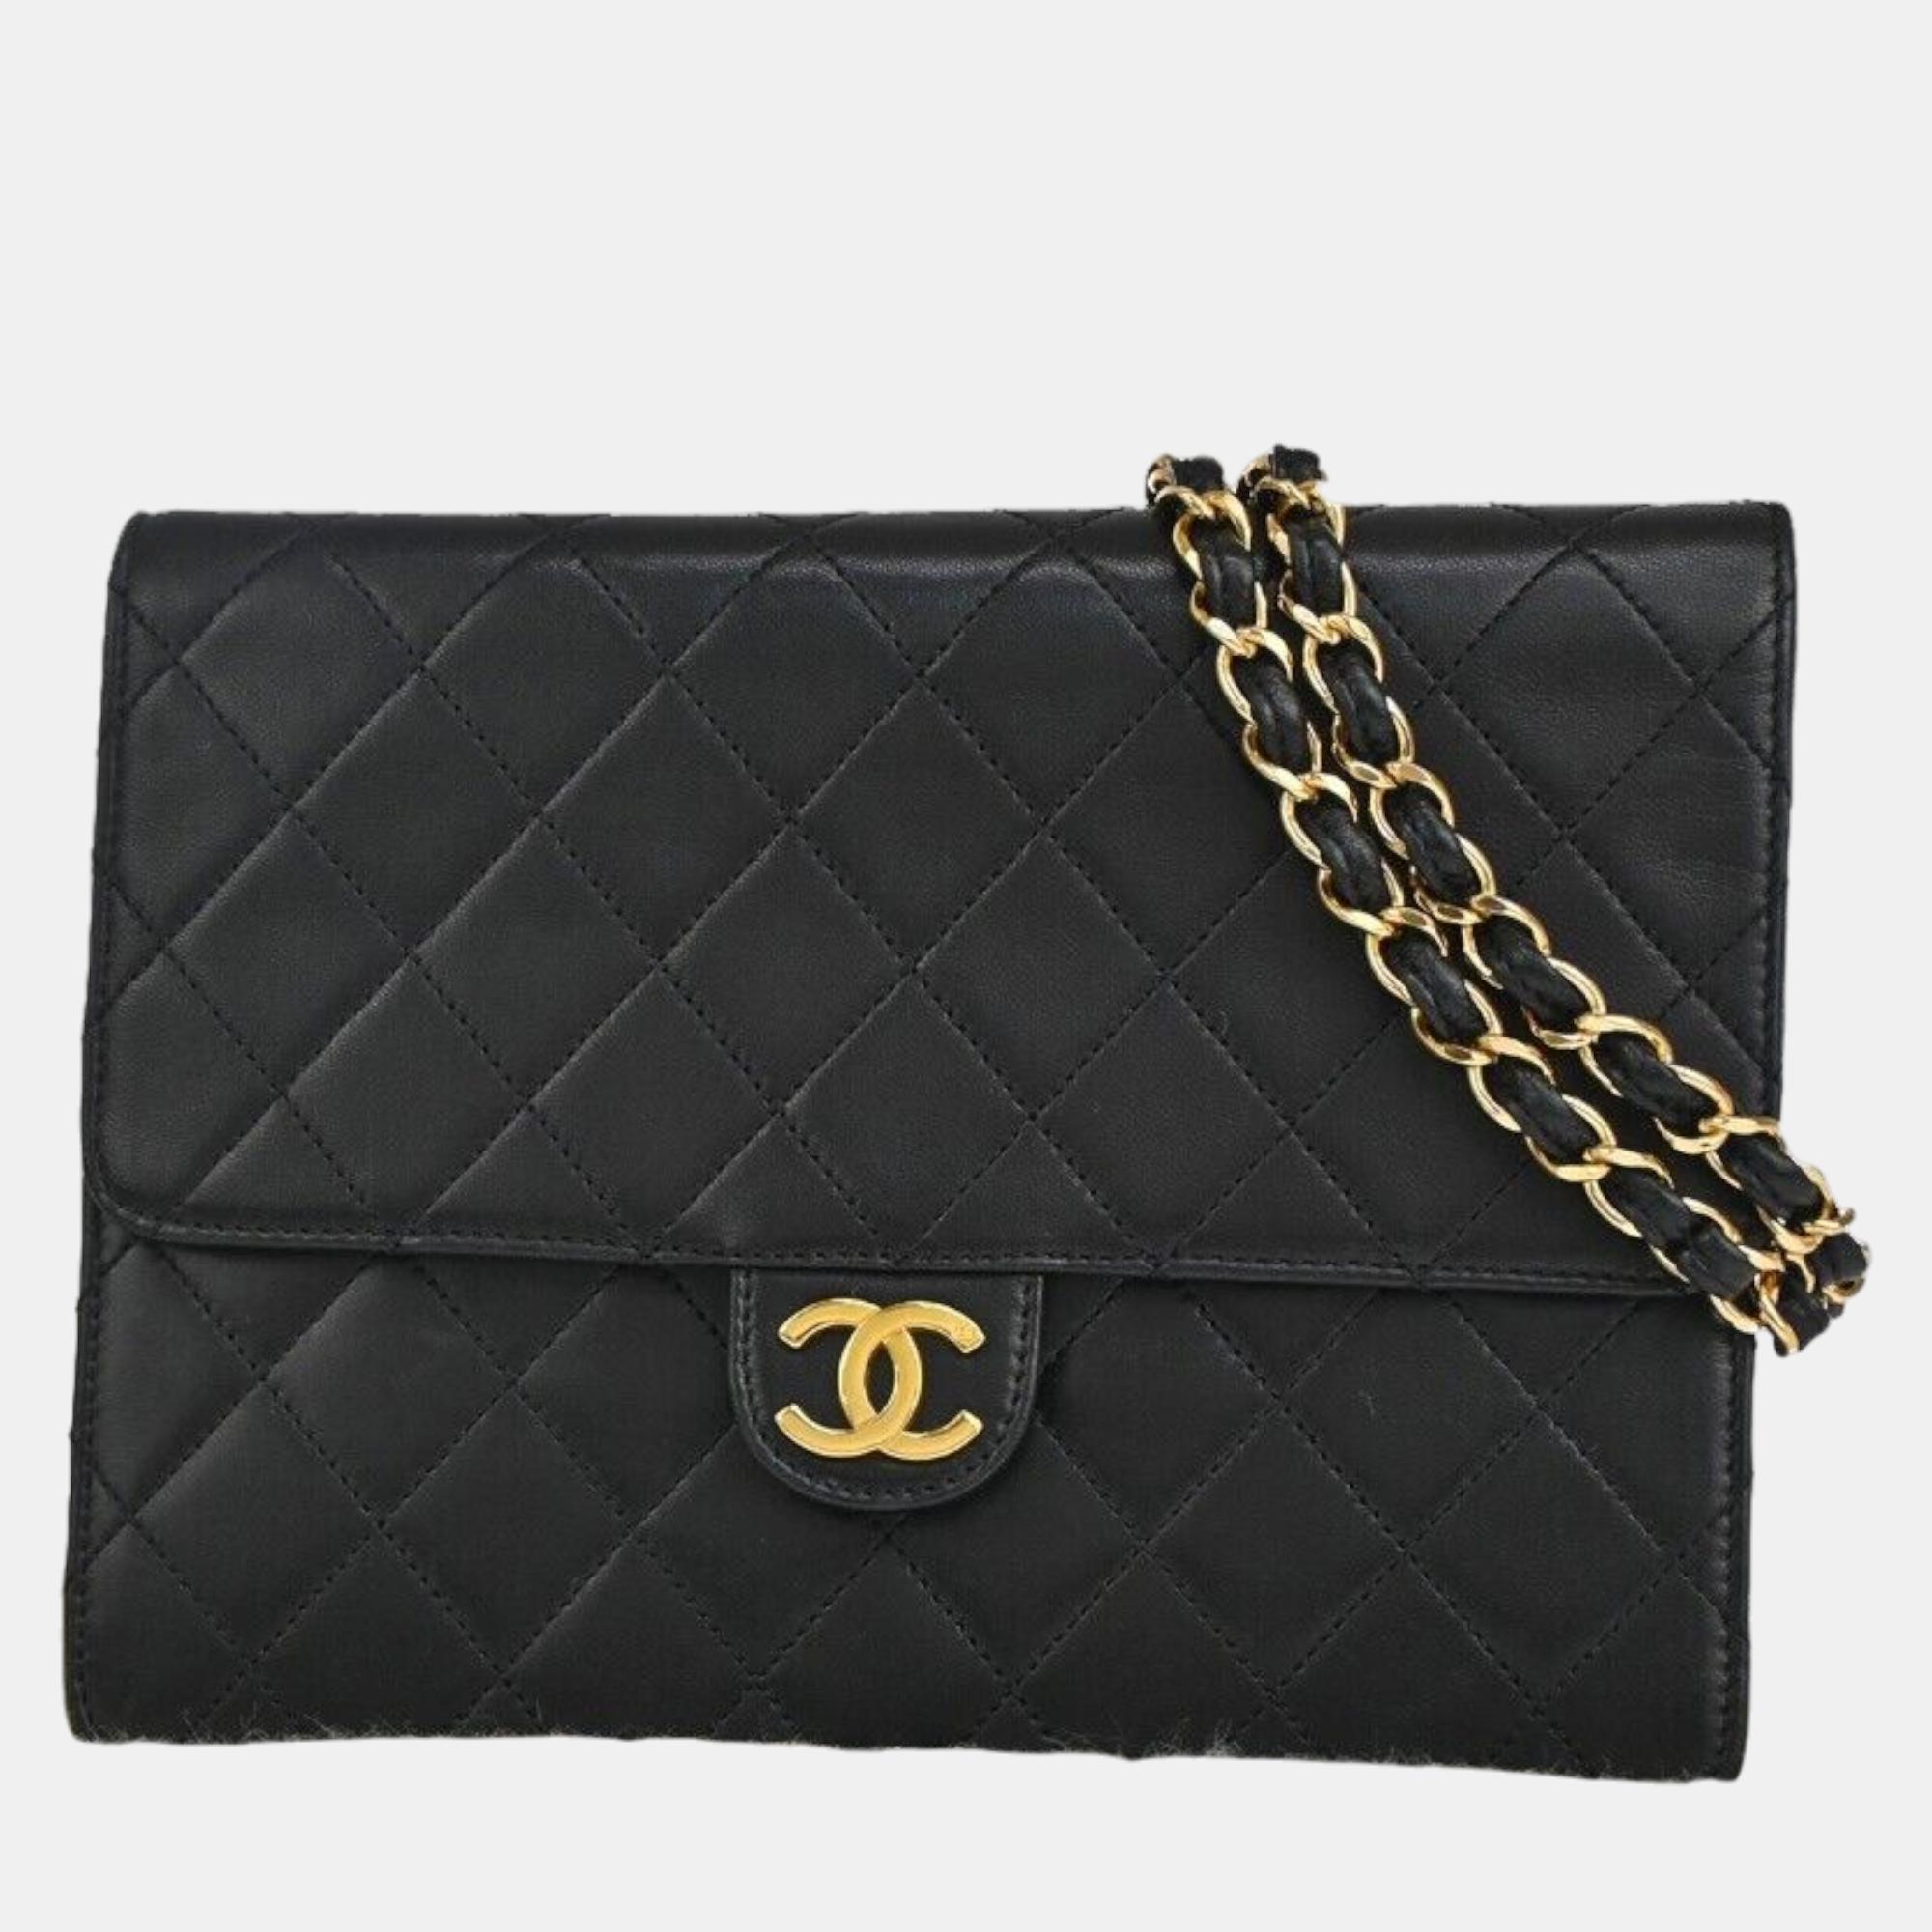 Chanel leather medium classic single flap shoulder bags